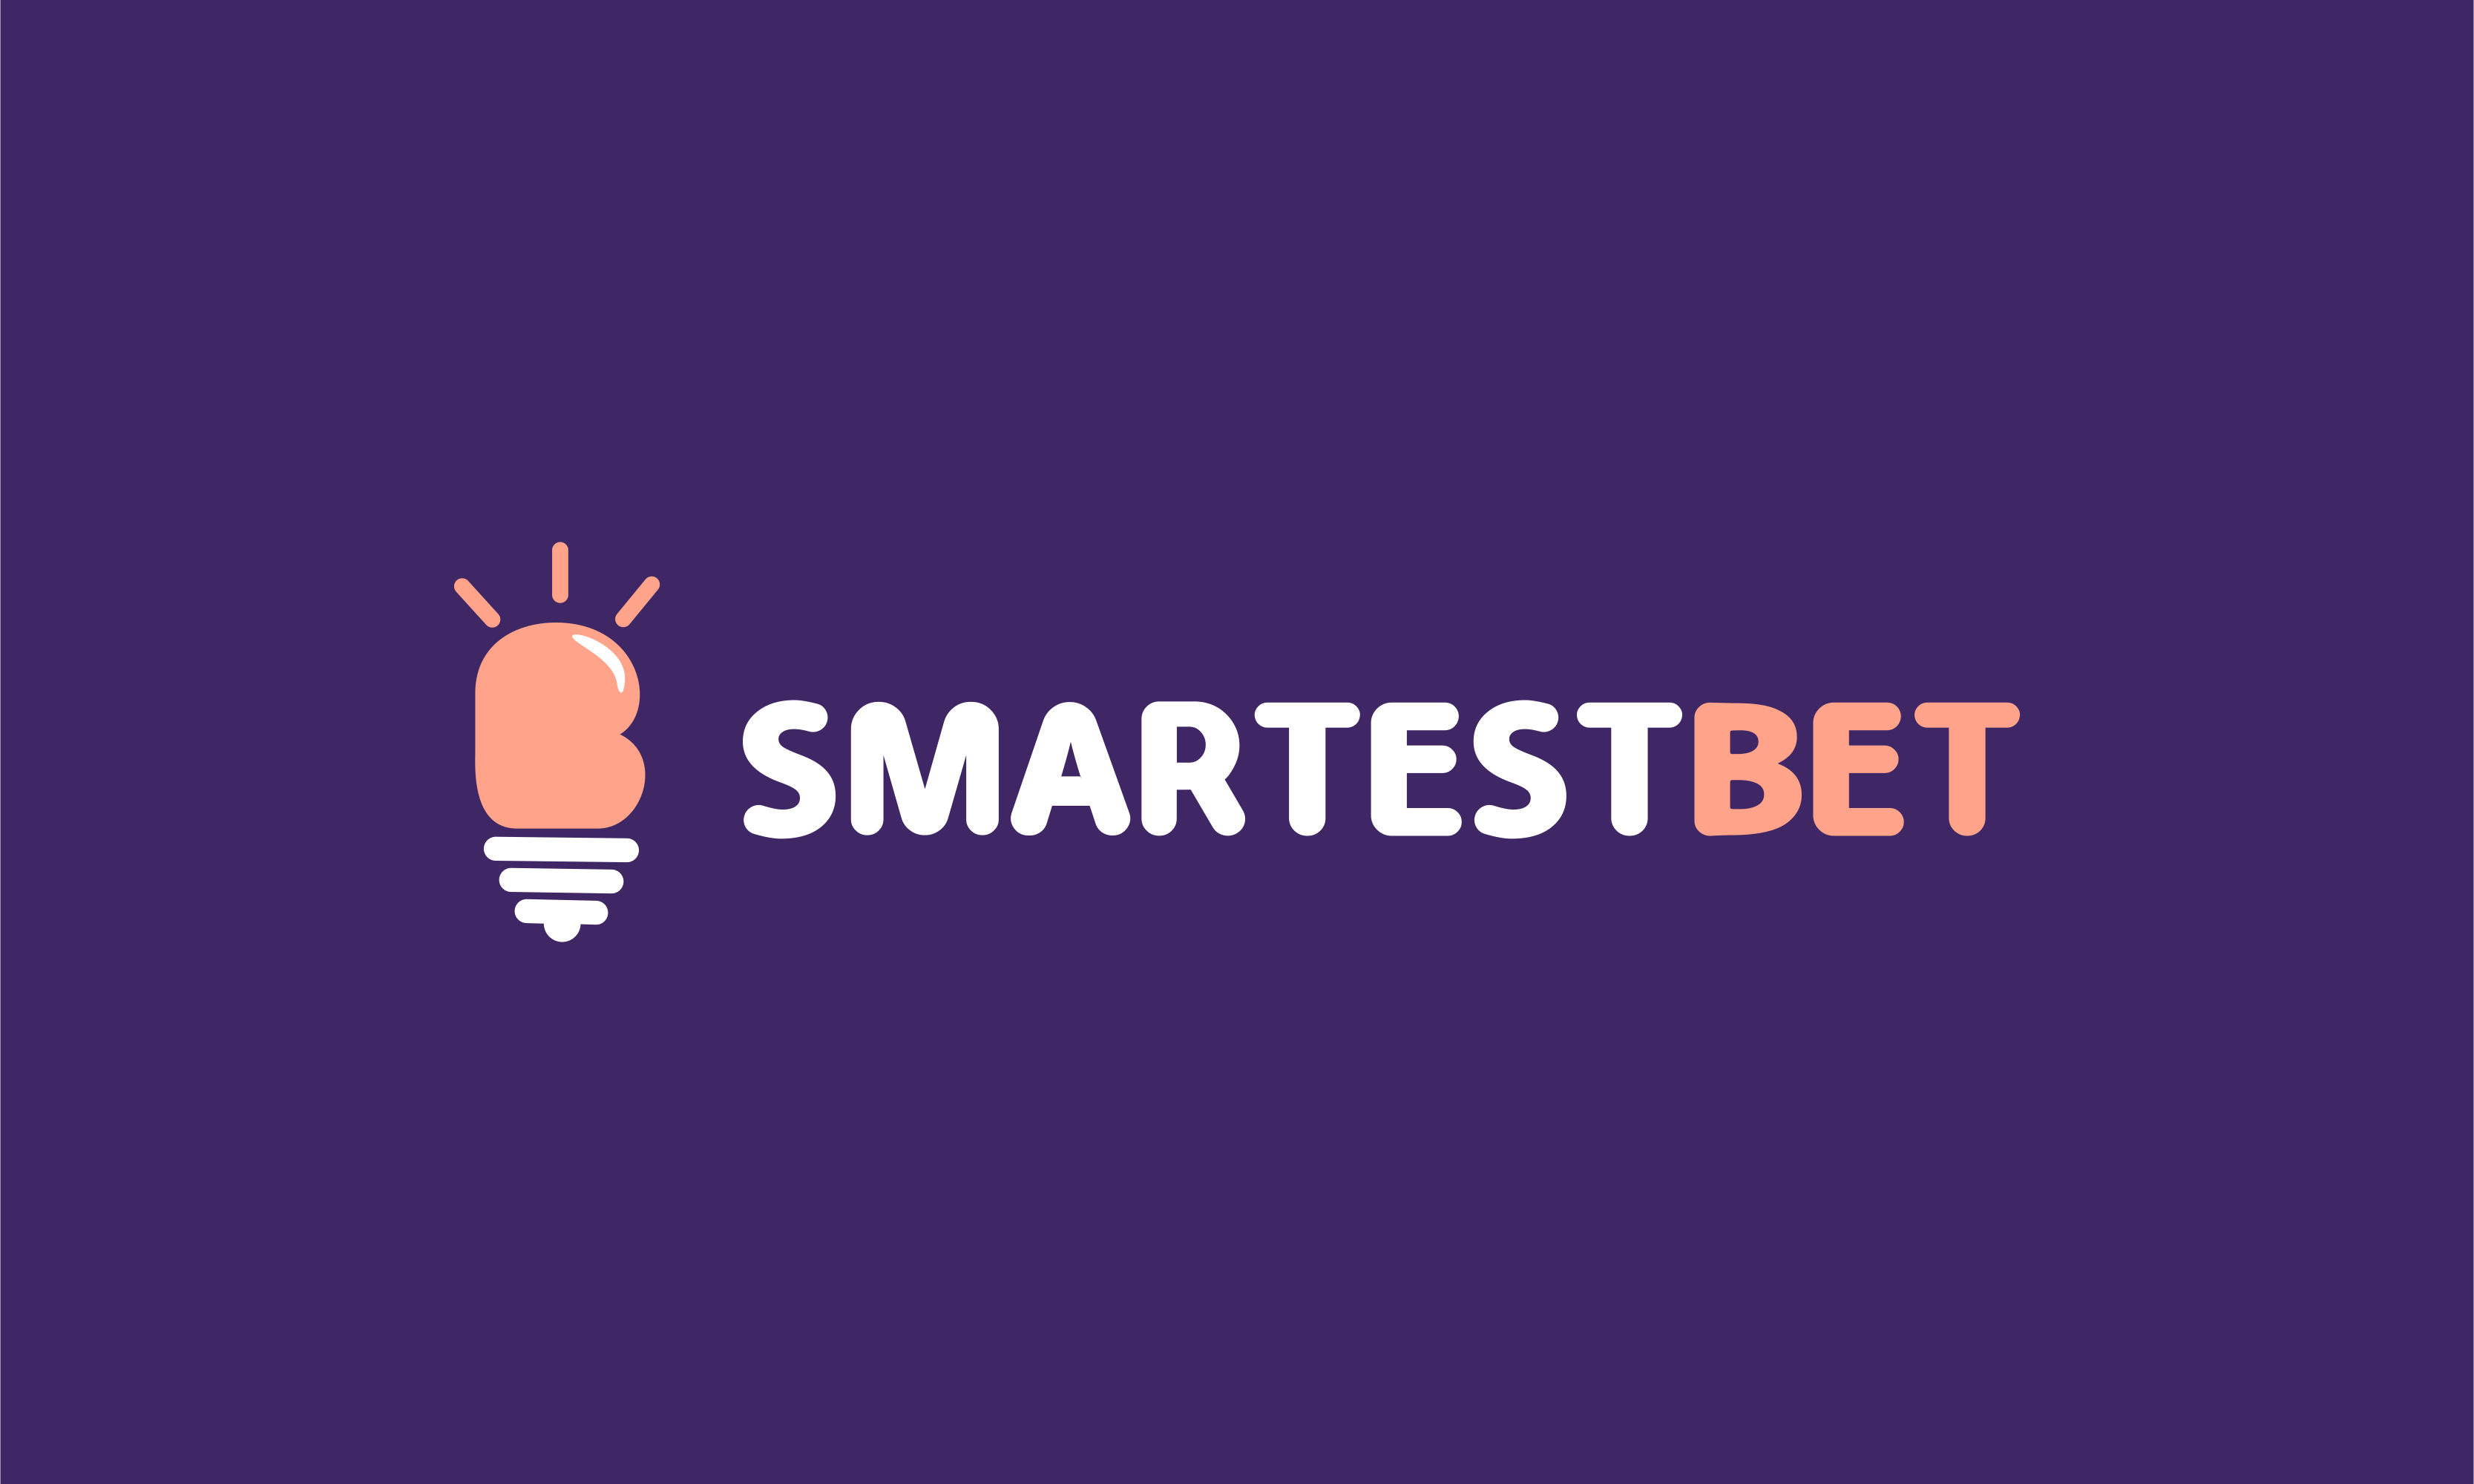 SmartestBet.png